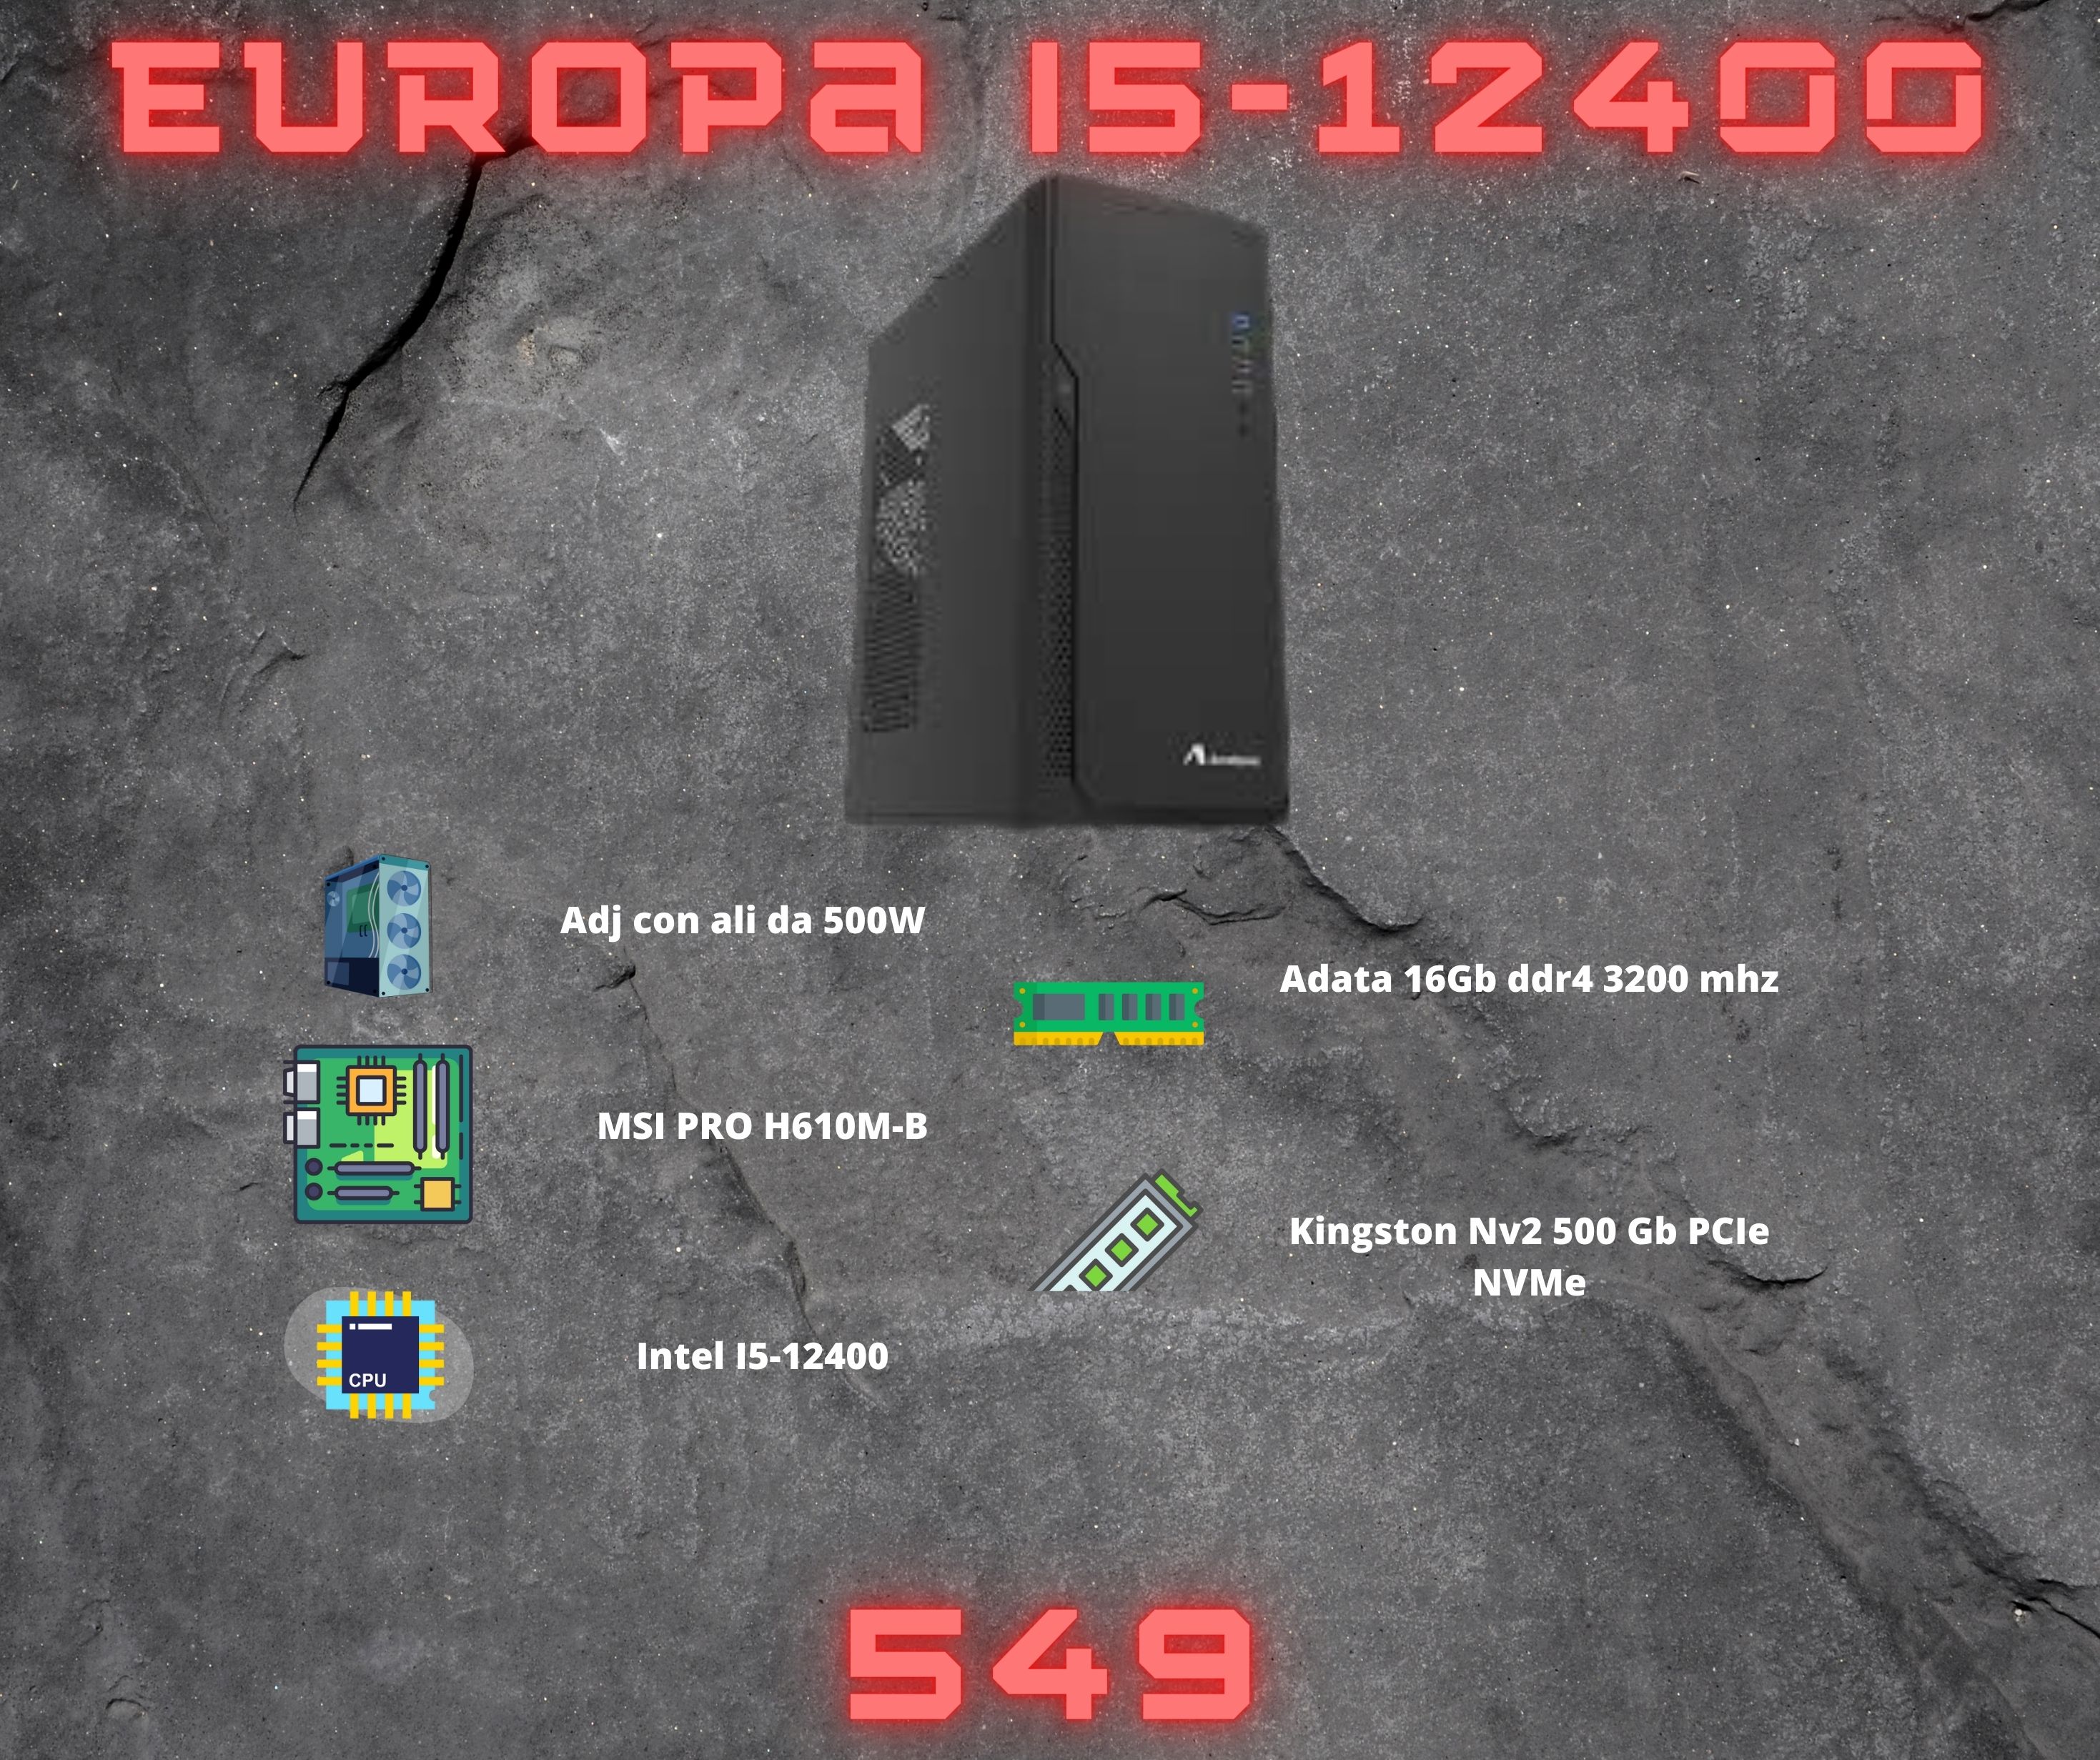 Europa I5-12400